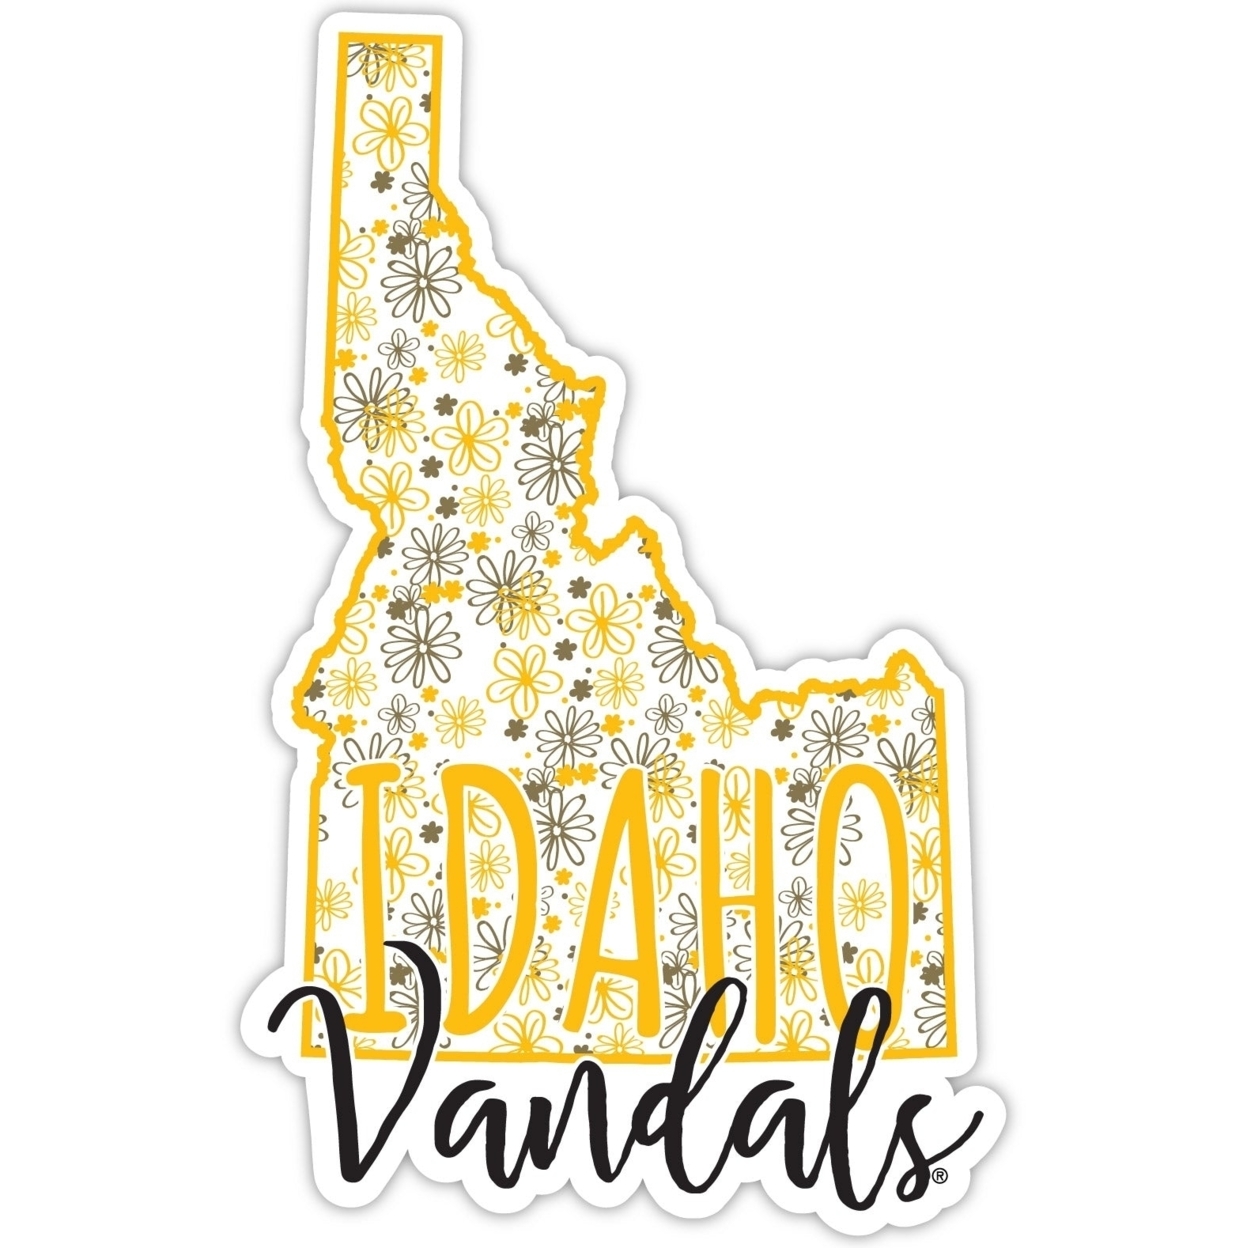 Idaho Vandals Floral State Die Cut Decal 2-Inch